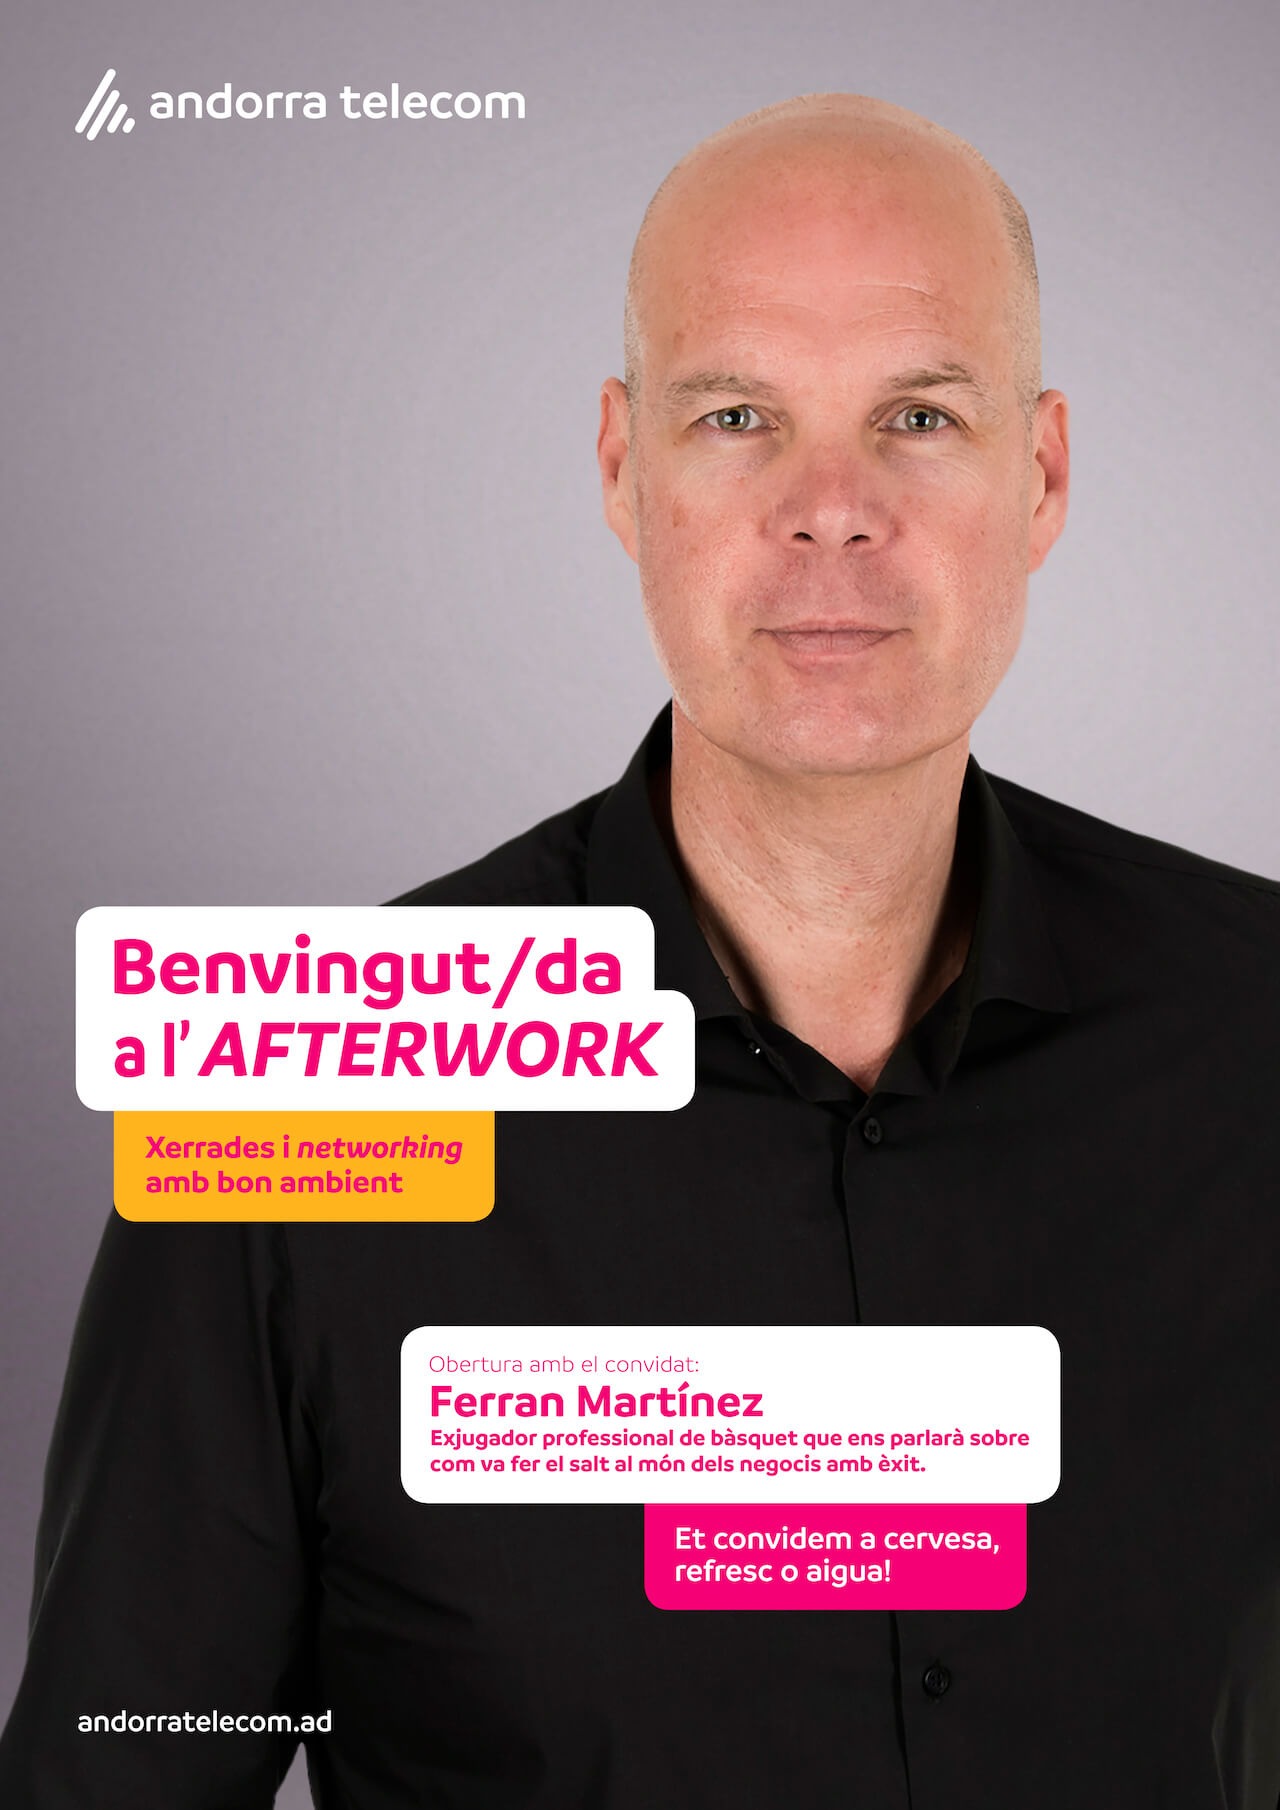 6th afterwork with Ferran Martinez